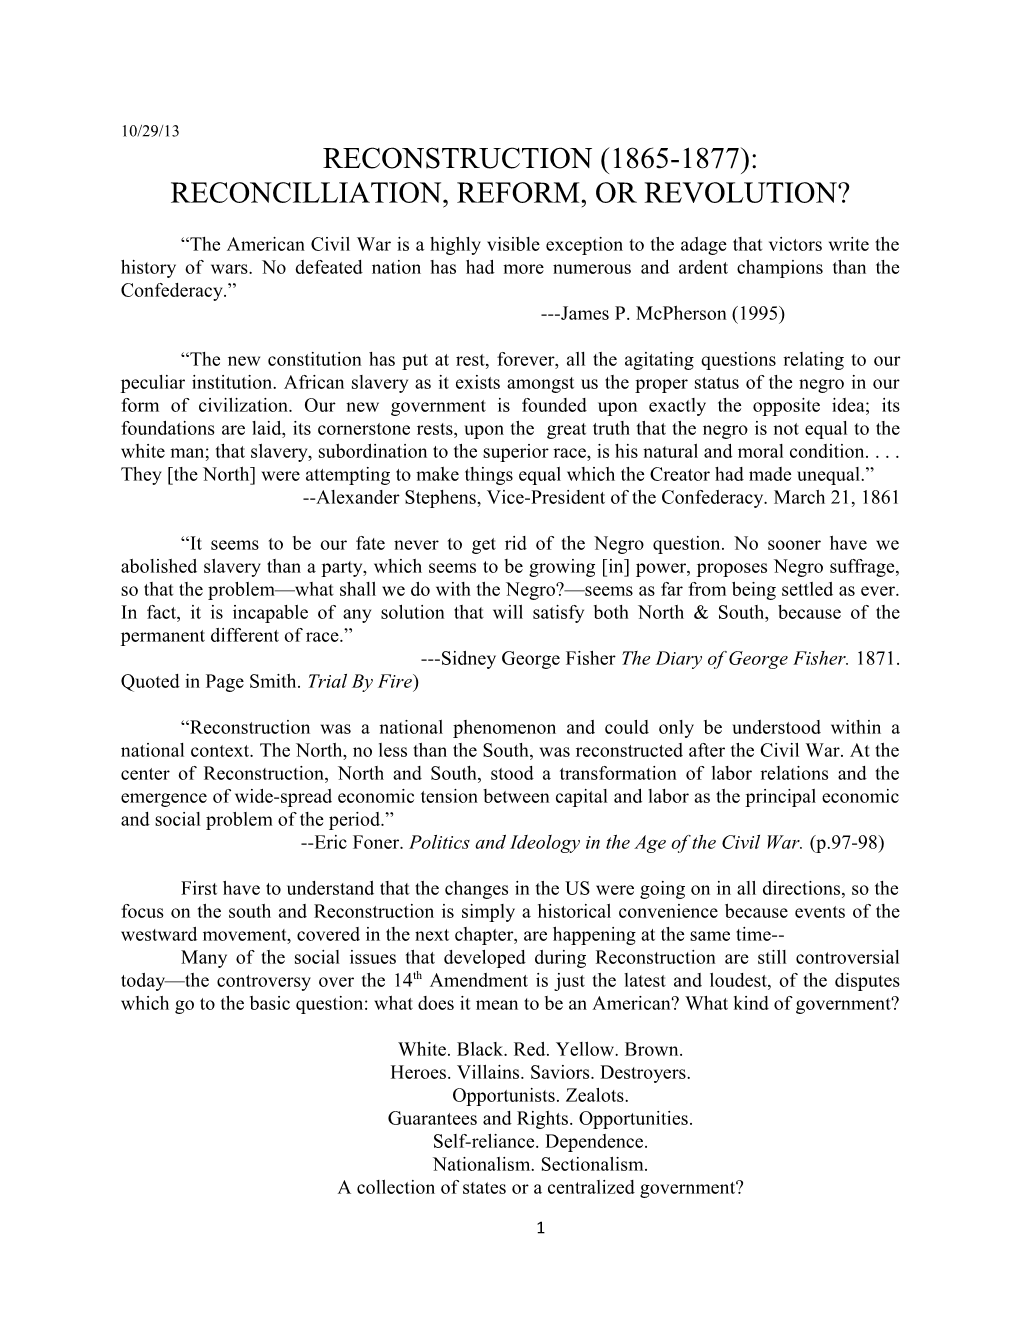 Reconcilliation, Reform, Or Revolution?